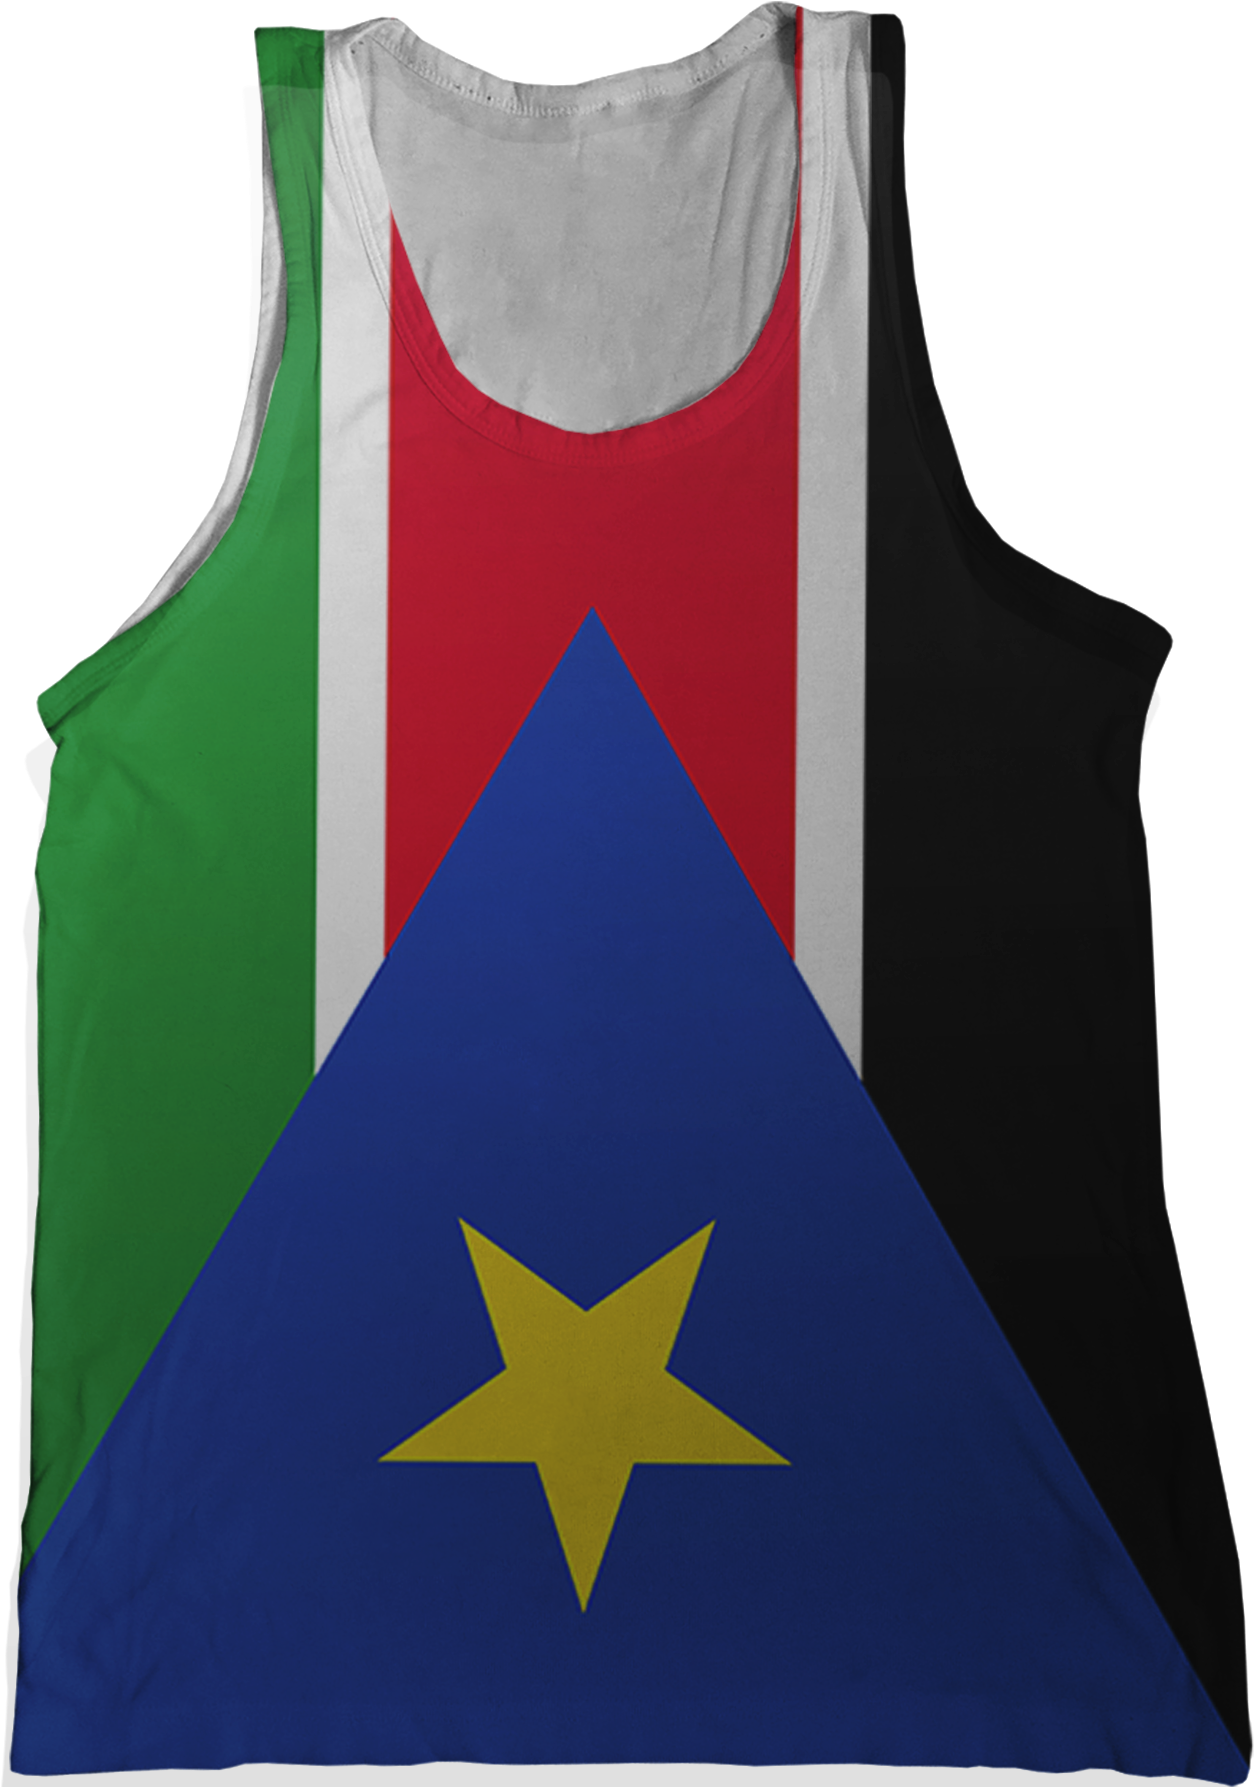 South Sudan Flag Tank Top - Sweater Vest (1296x1786)